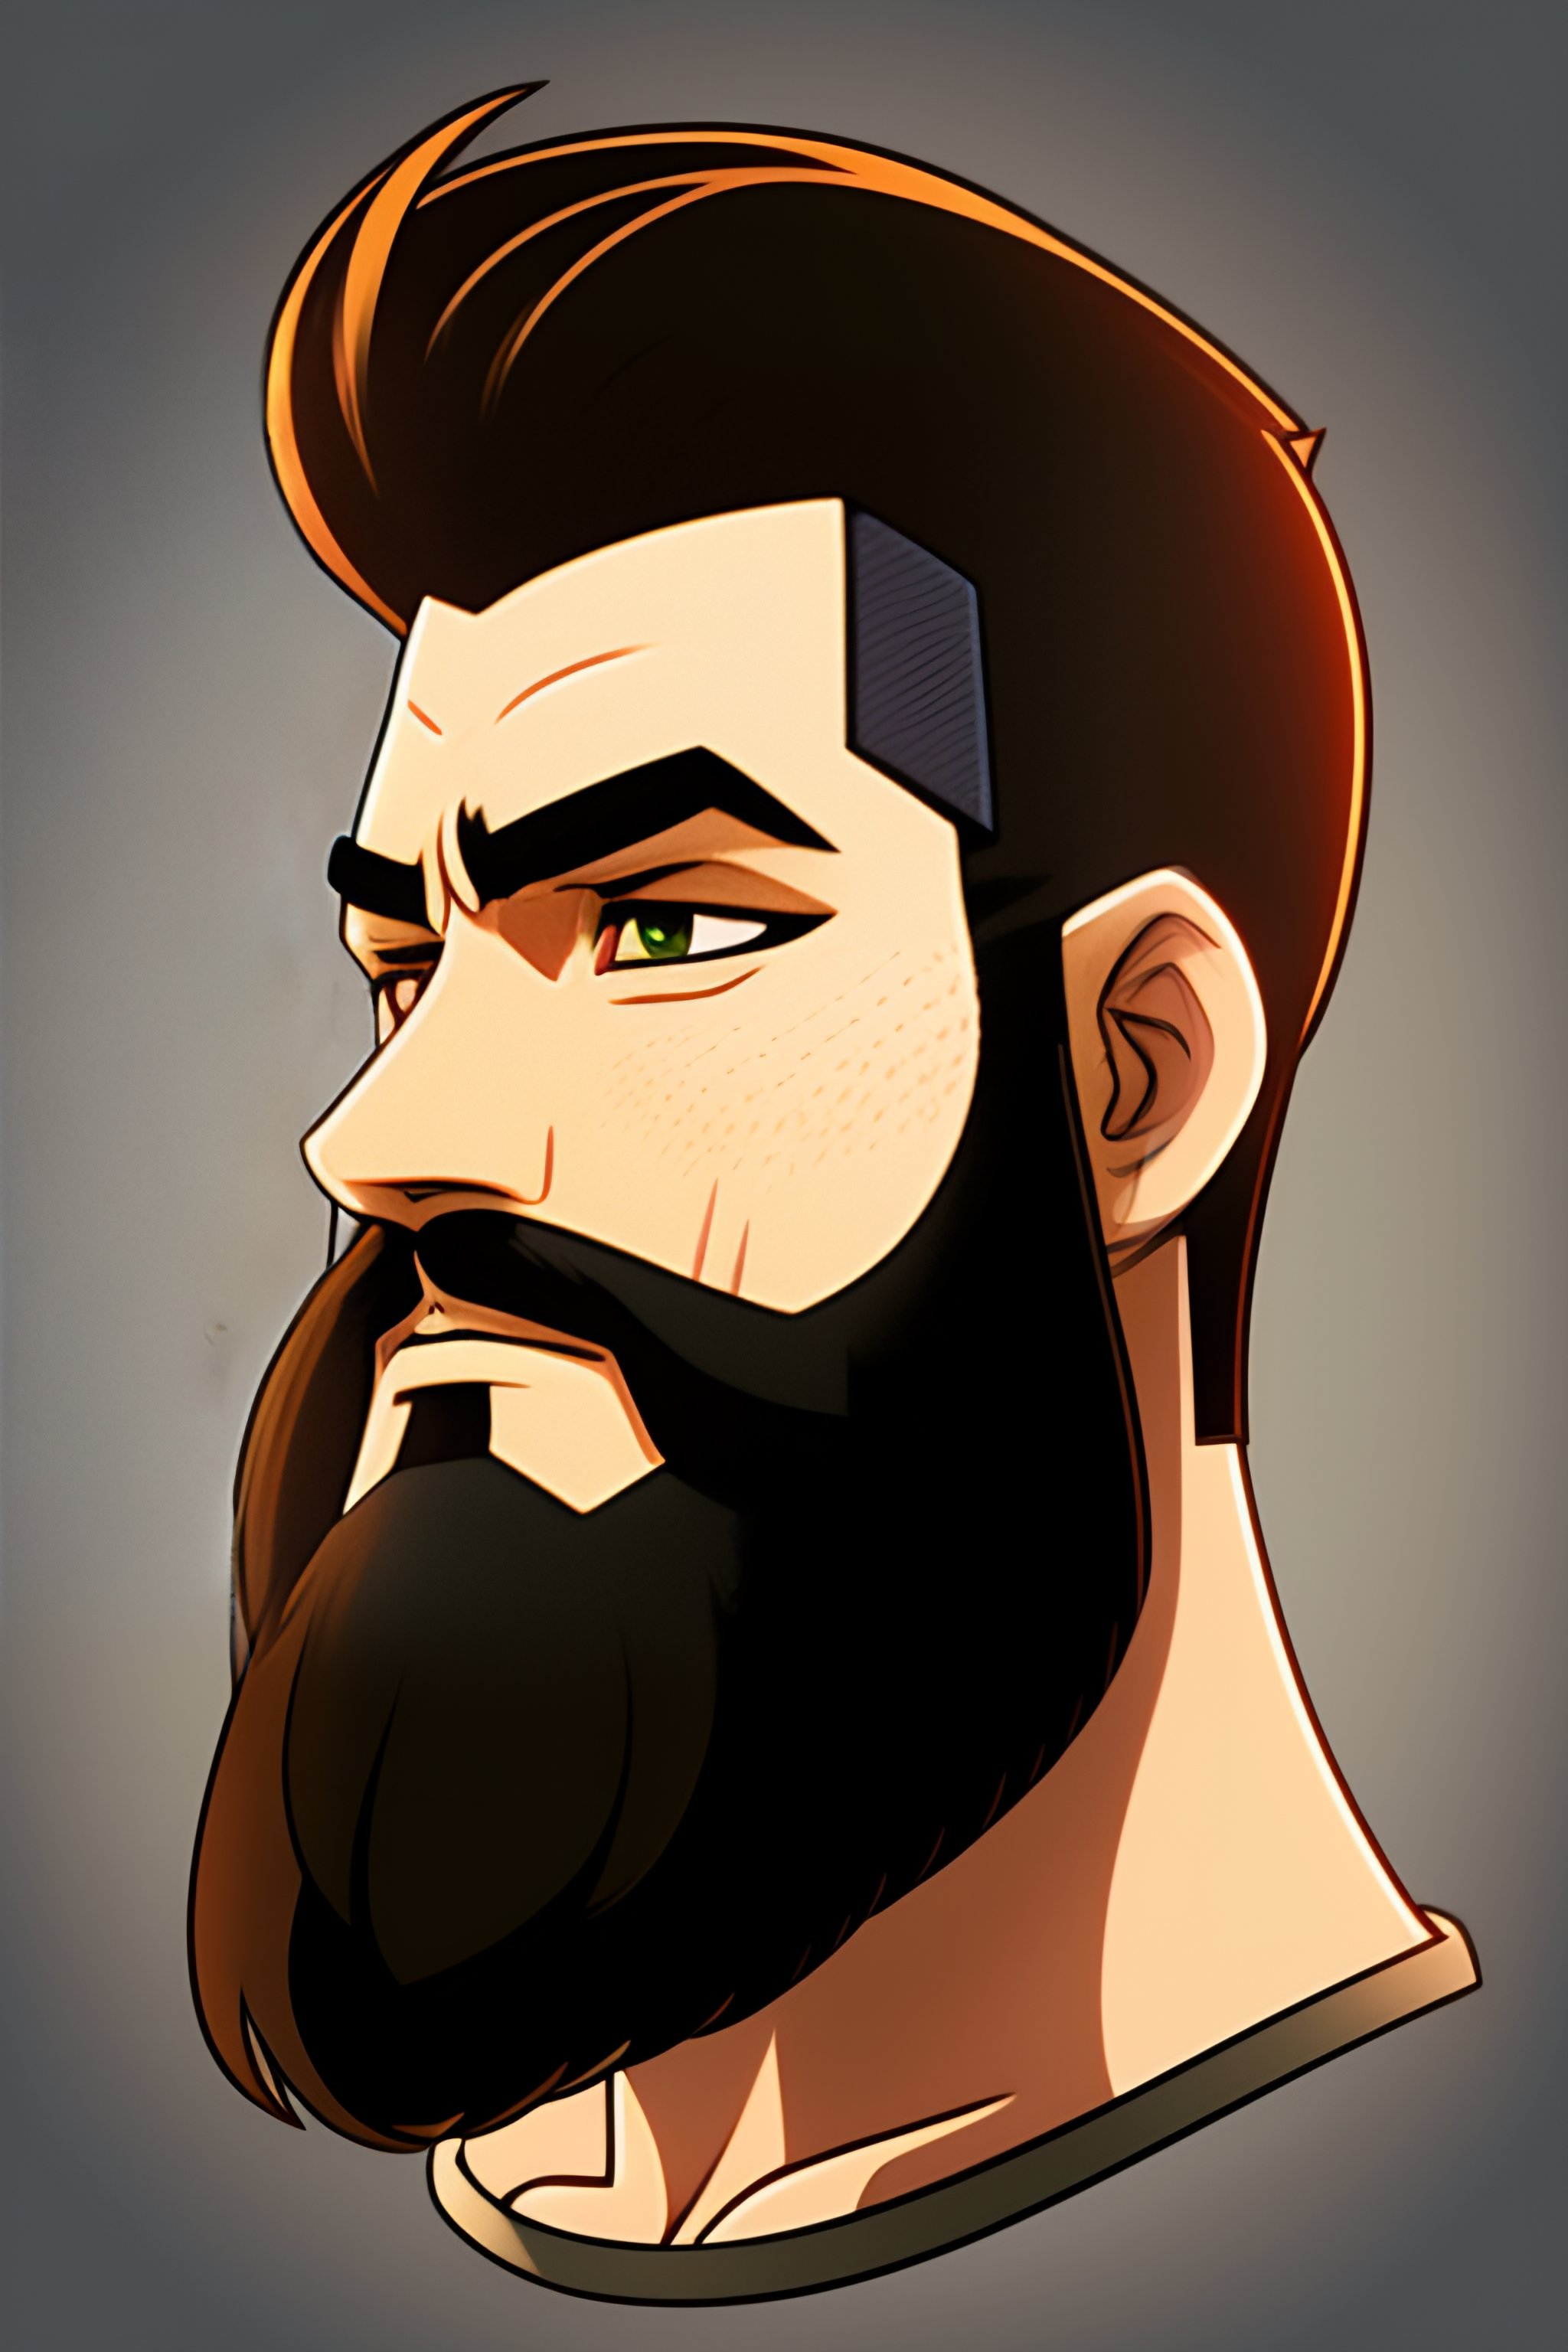 bearded man cartoon